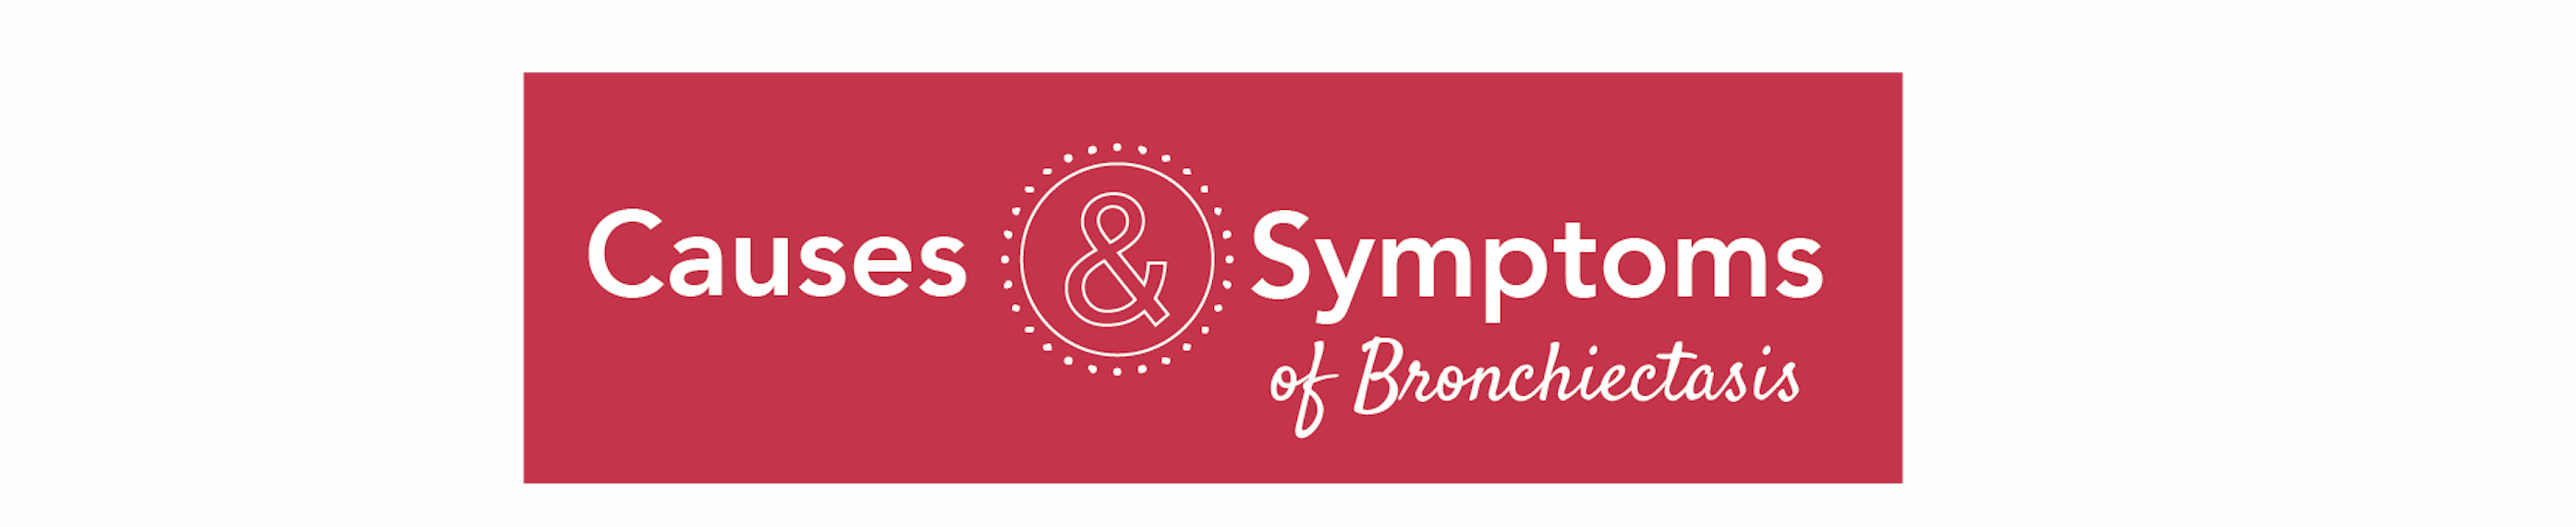 Causes & Symptoms of Bronchiectasis